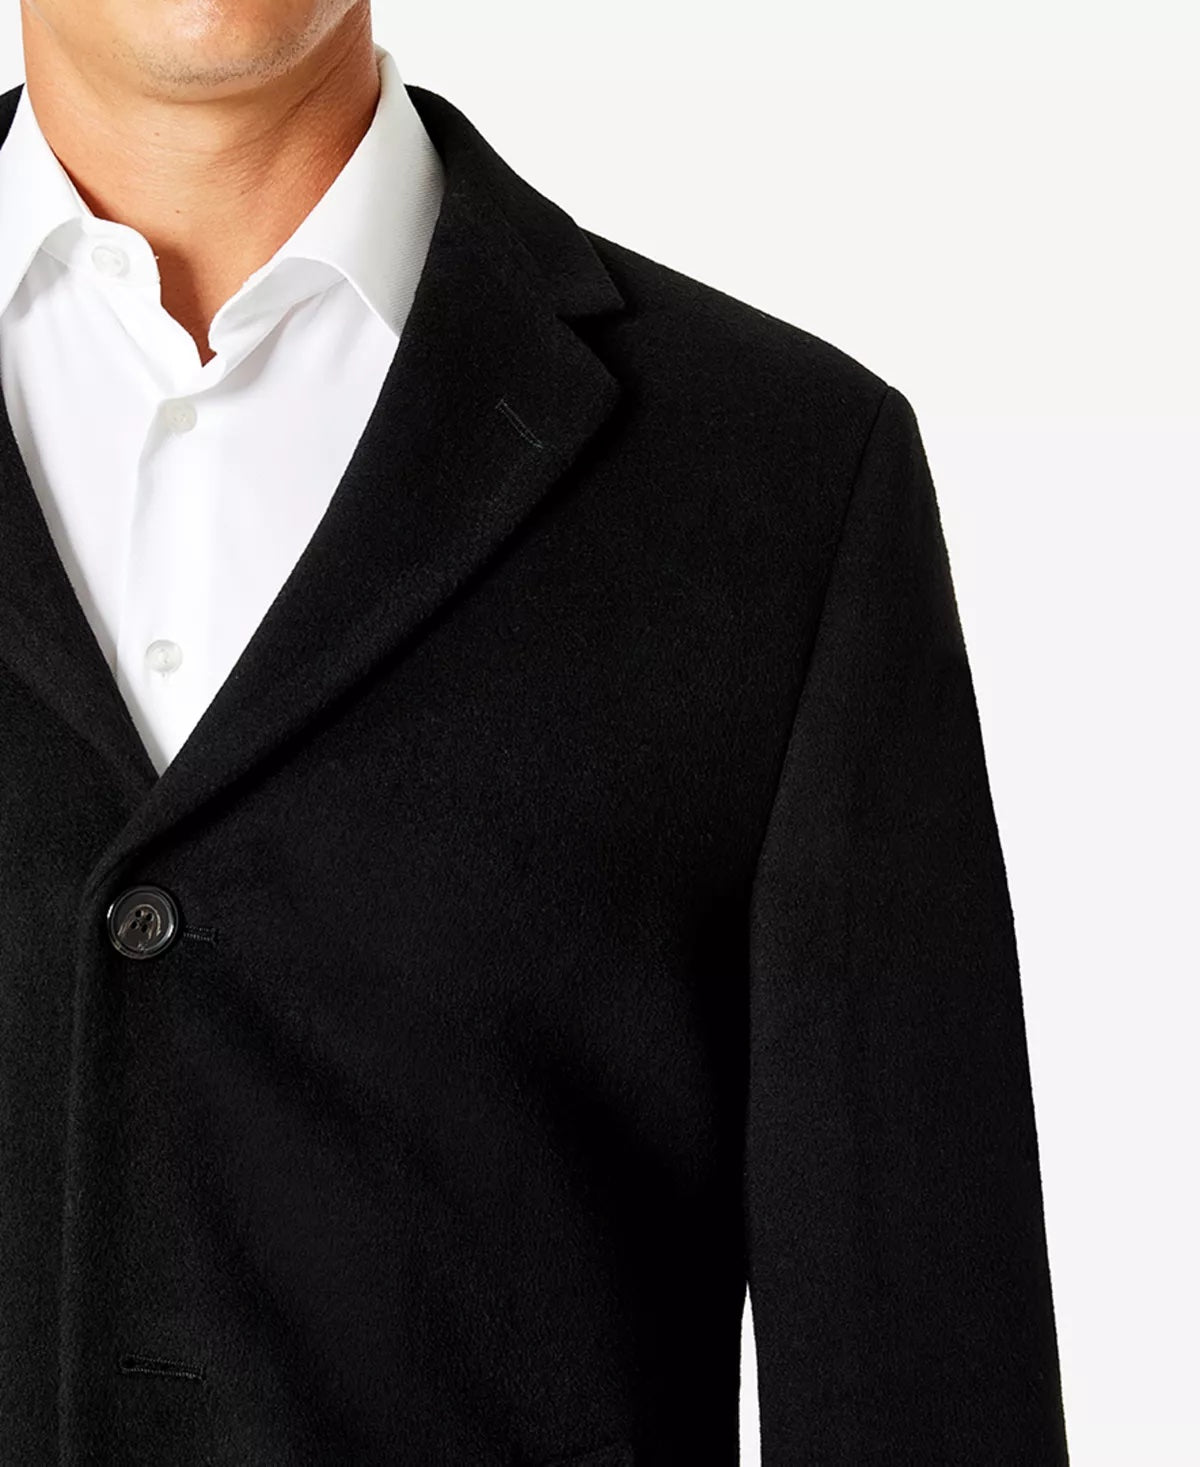 Kenneth Cole Reaction Men's Slim Fit Overcoat 42R Single Breasted Black Coat